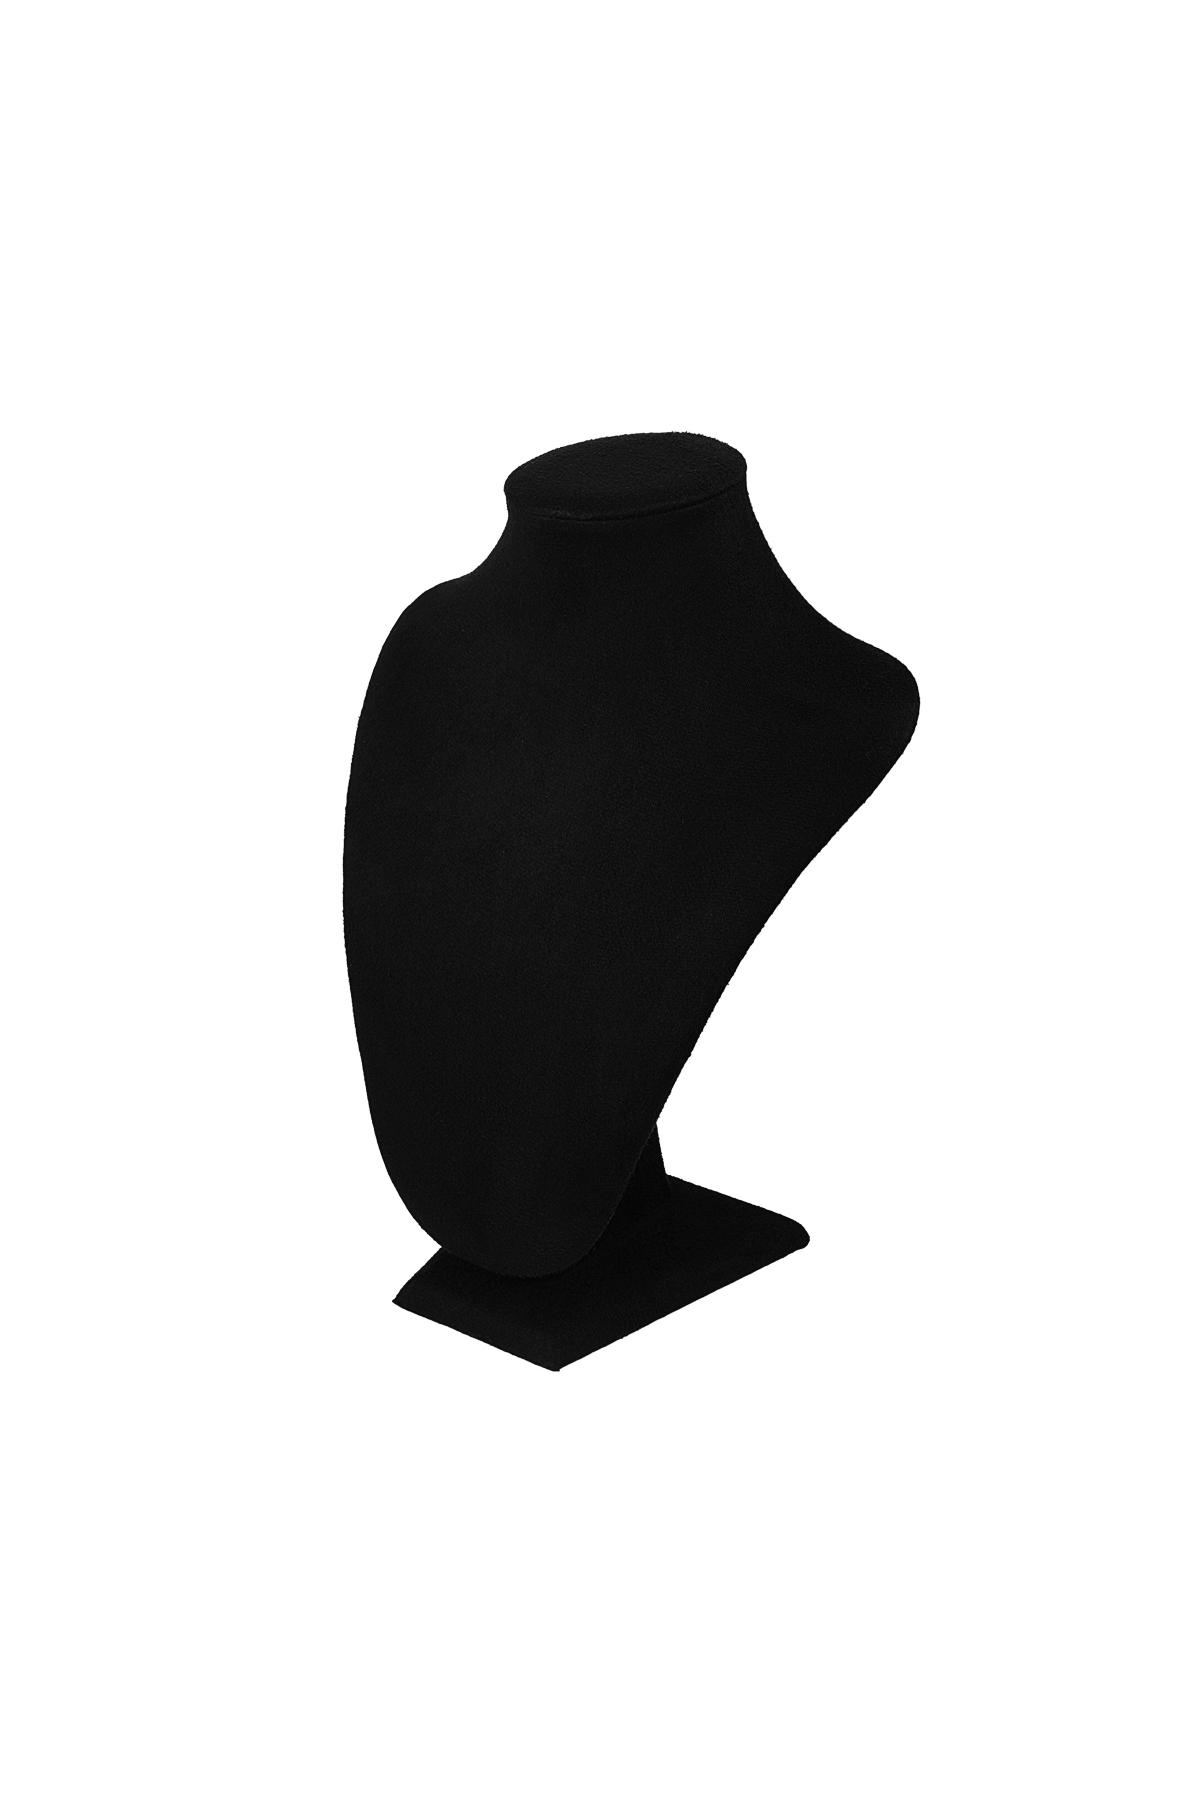 Display halsketting klein - zwart Nylon